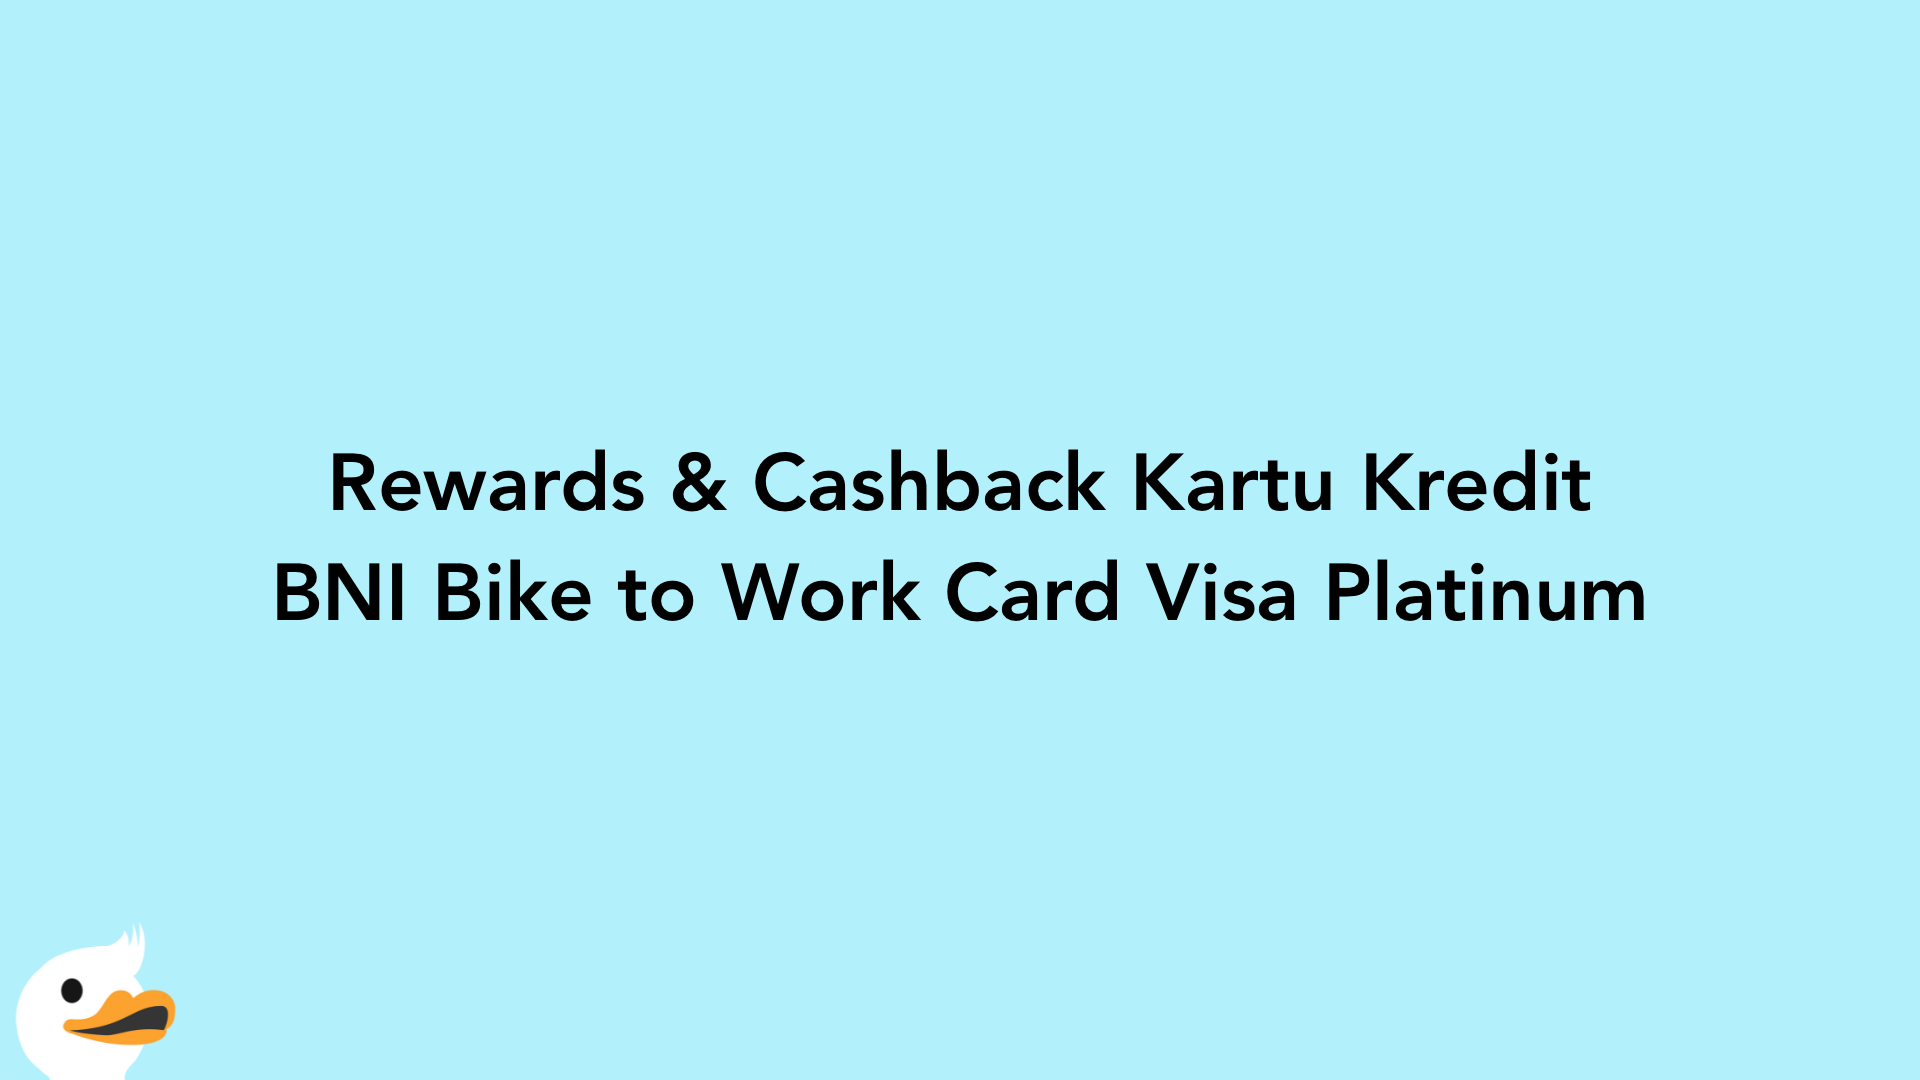 Rewards & Cashback Kartu Kredit BNI Bike to Work Card Visa Platinum